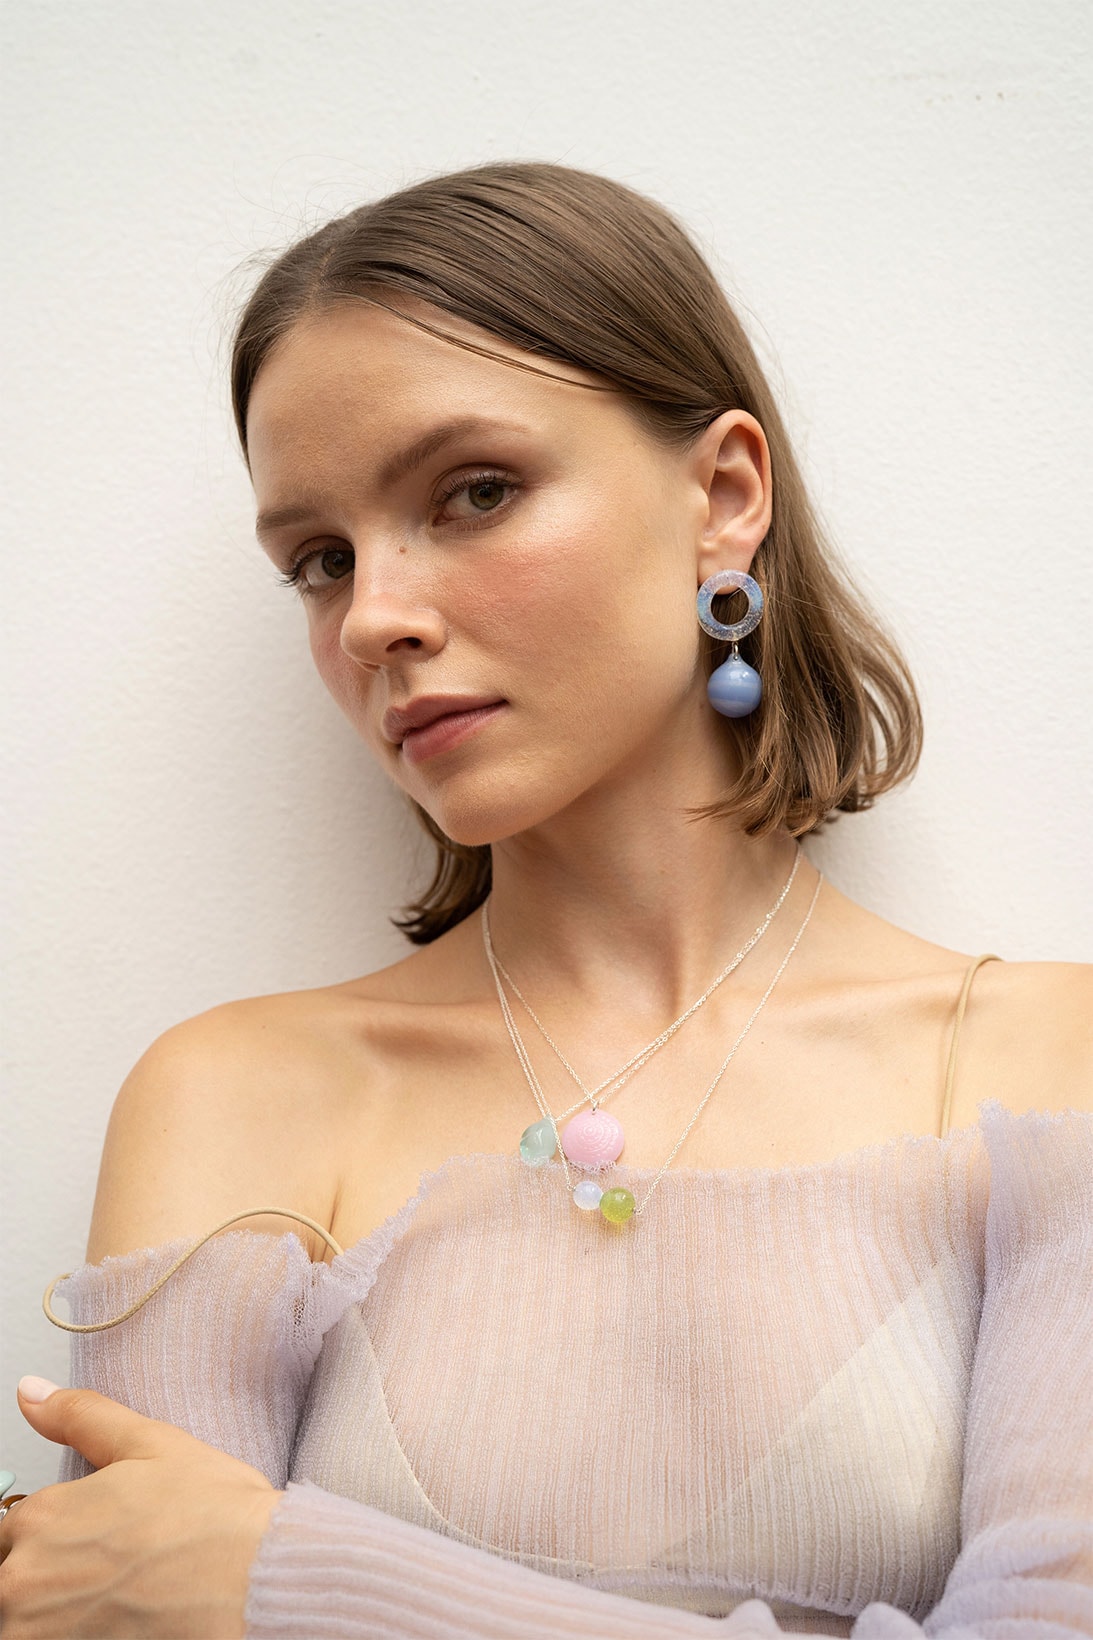 keane brooklyn glass jewelry brand earrings accessories necklace white top